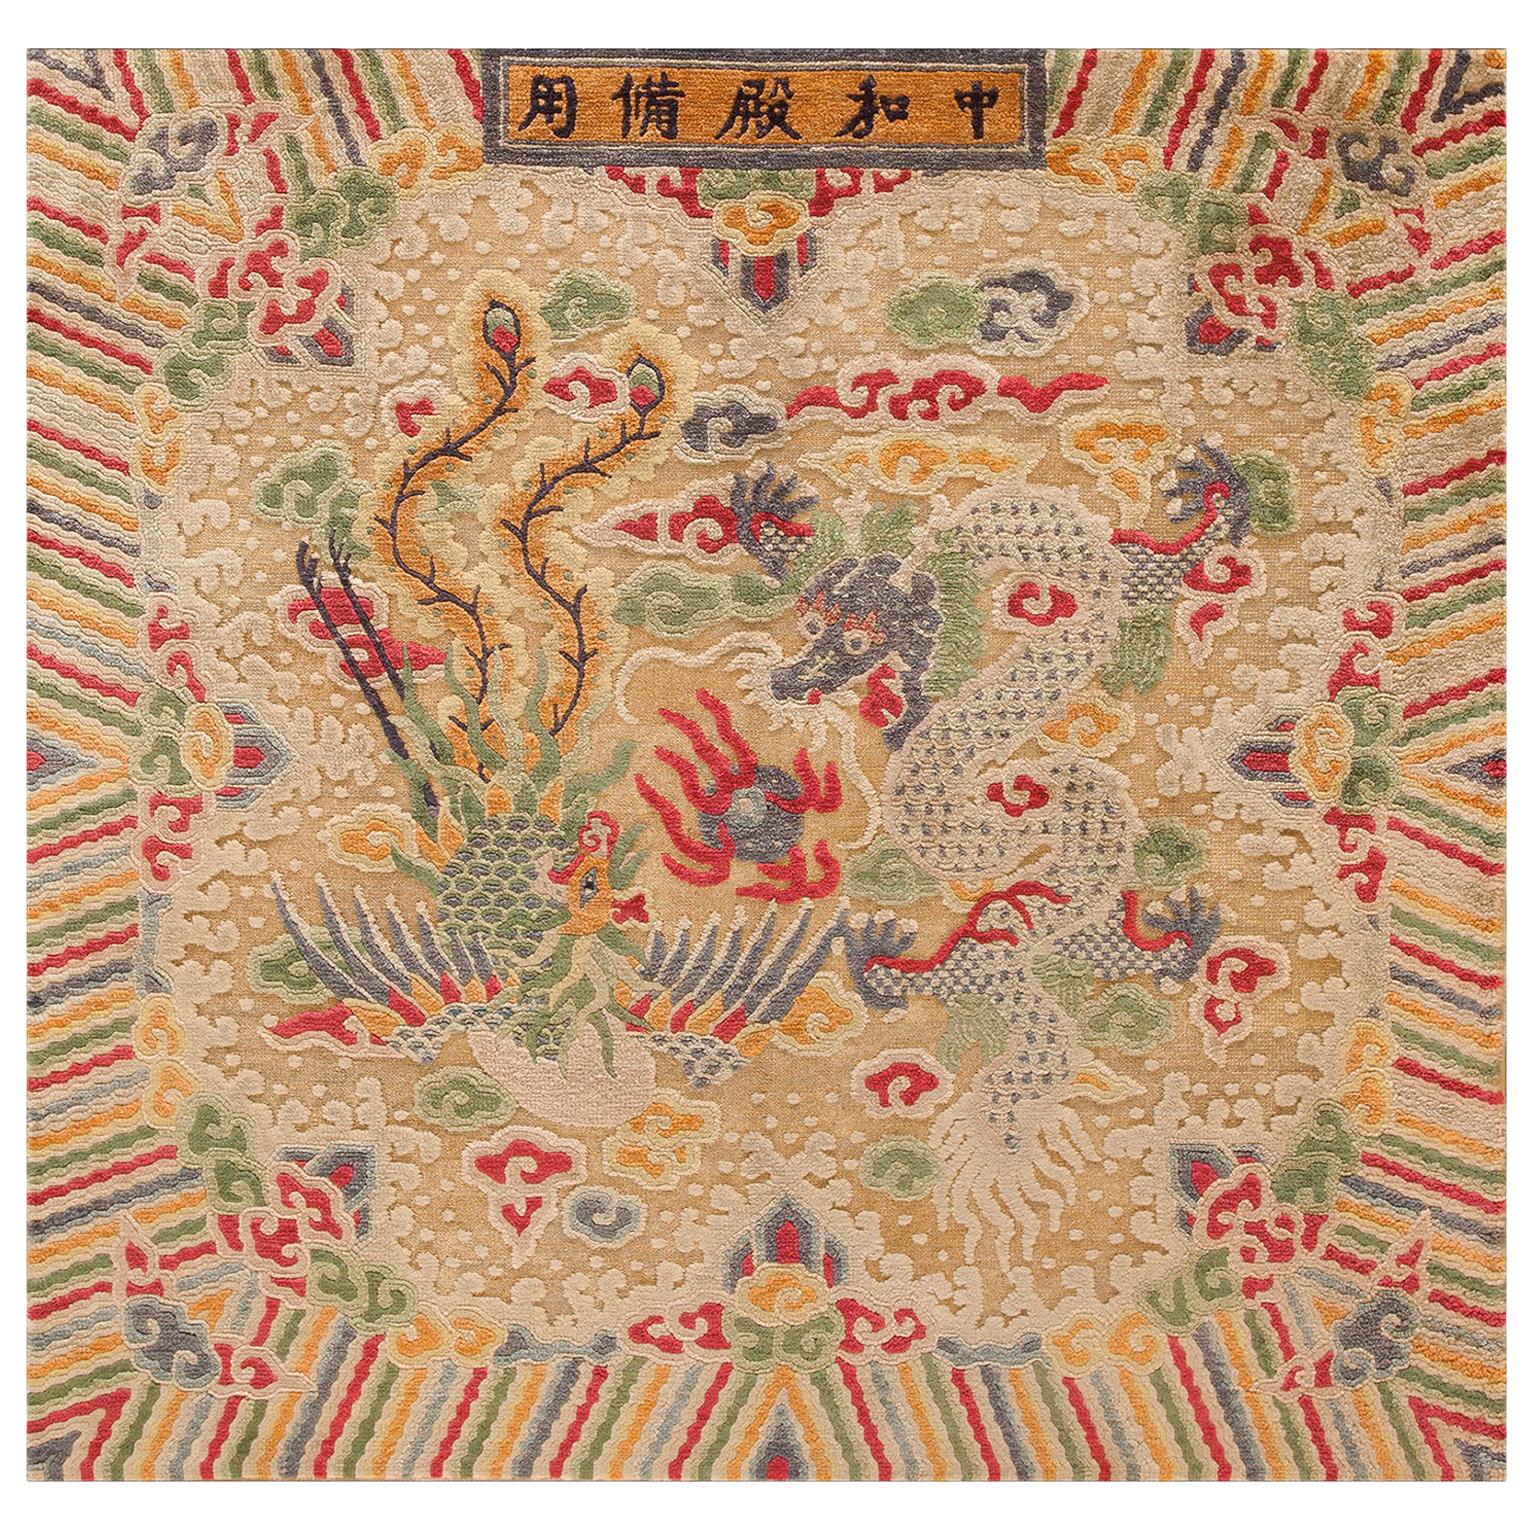 Early 20th Century Chinese Silk & Metallic Thread Carpet ( 4' x 4'-122 x 122 cm) For Sale